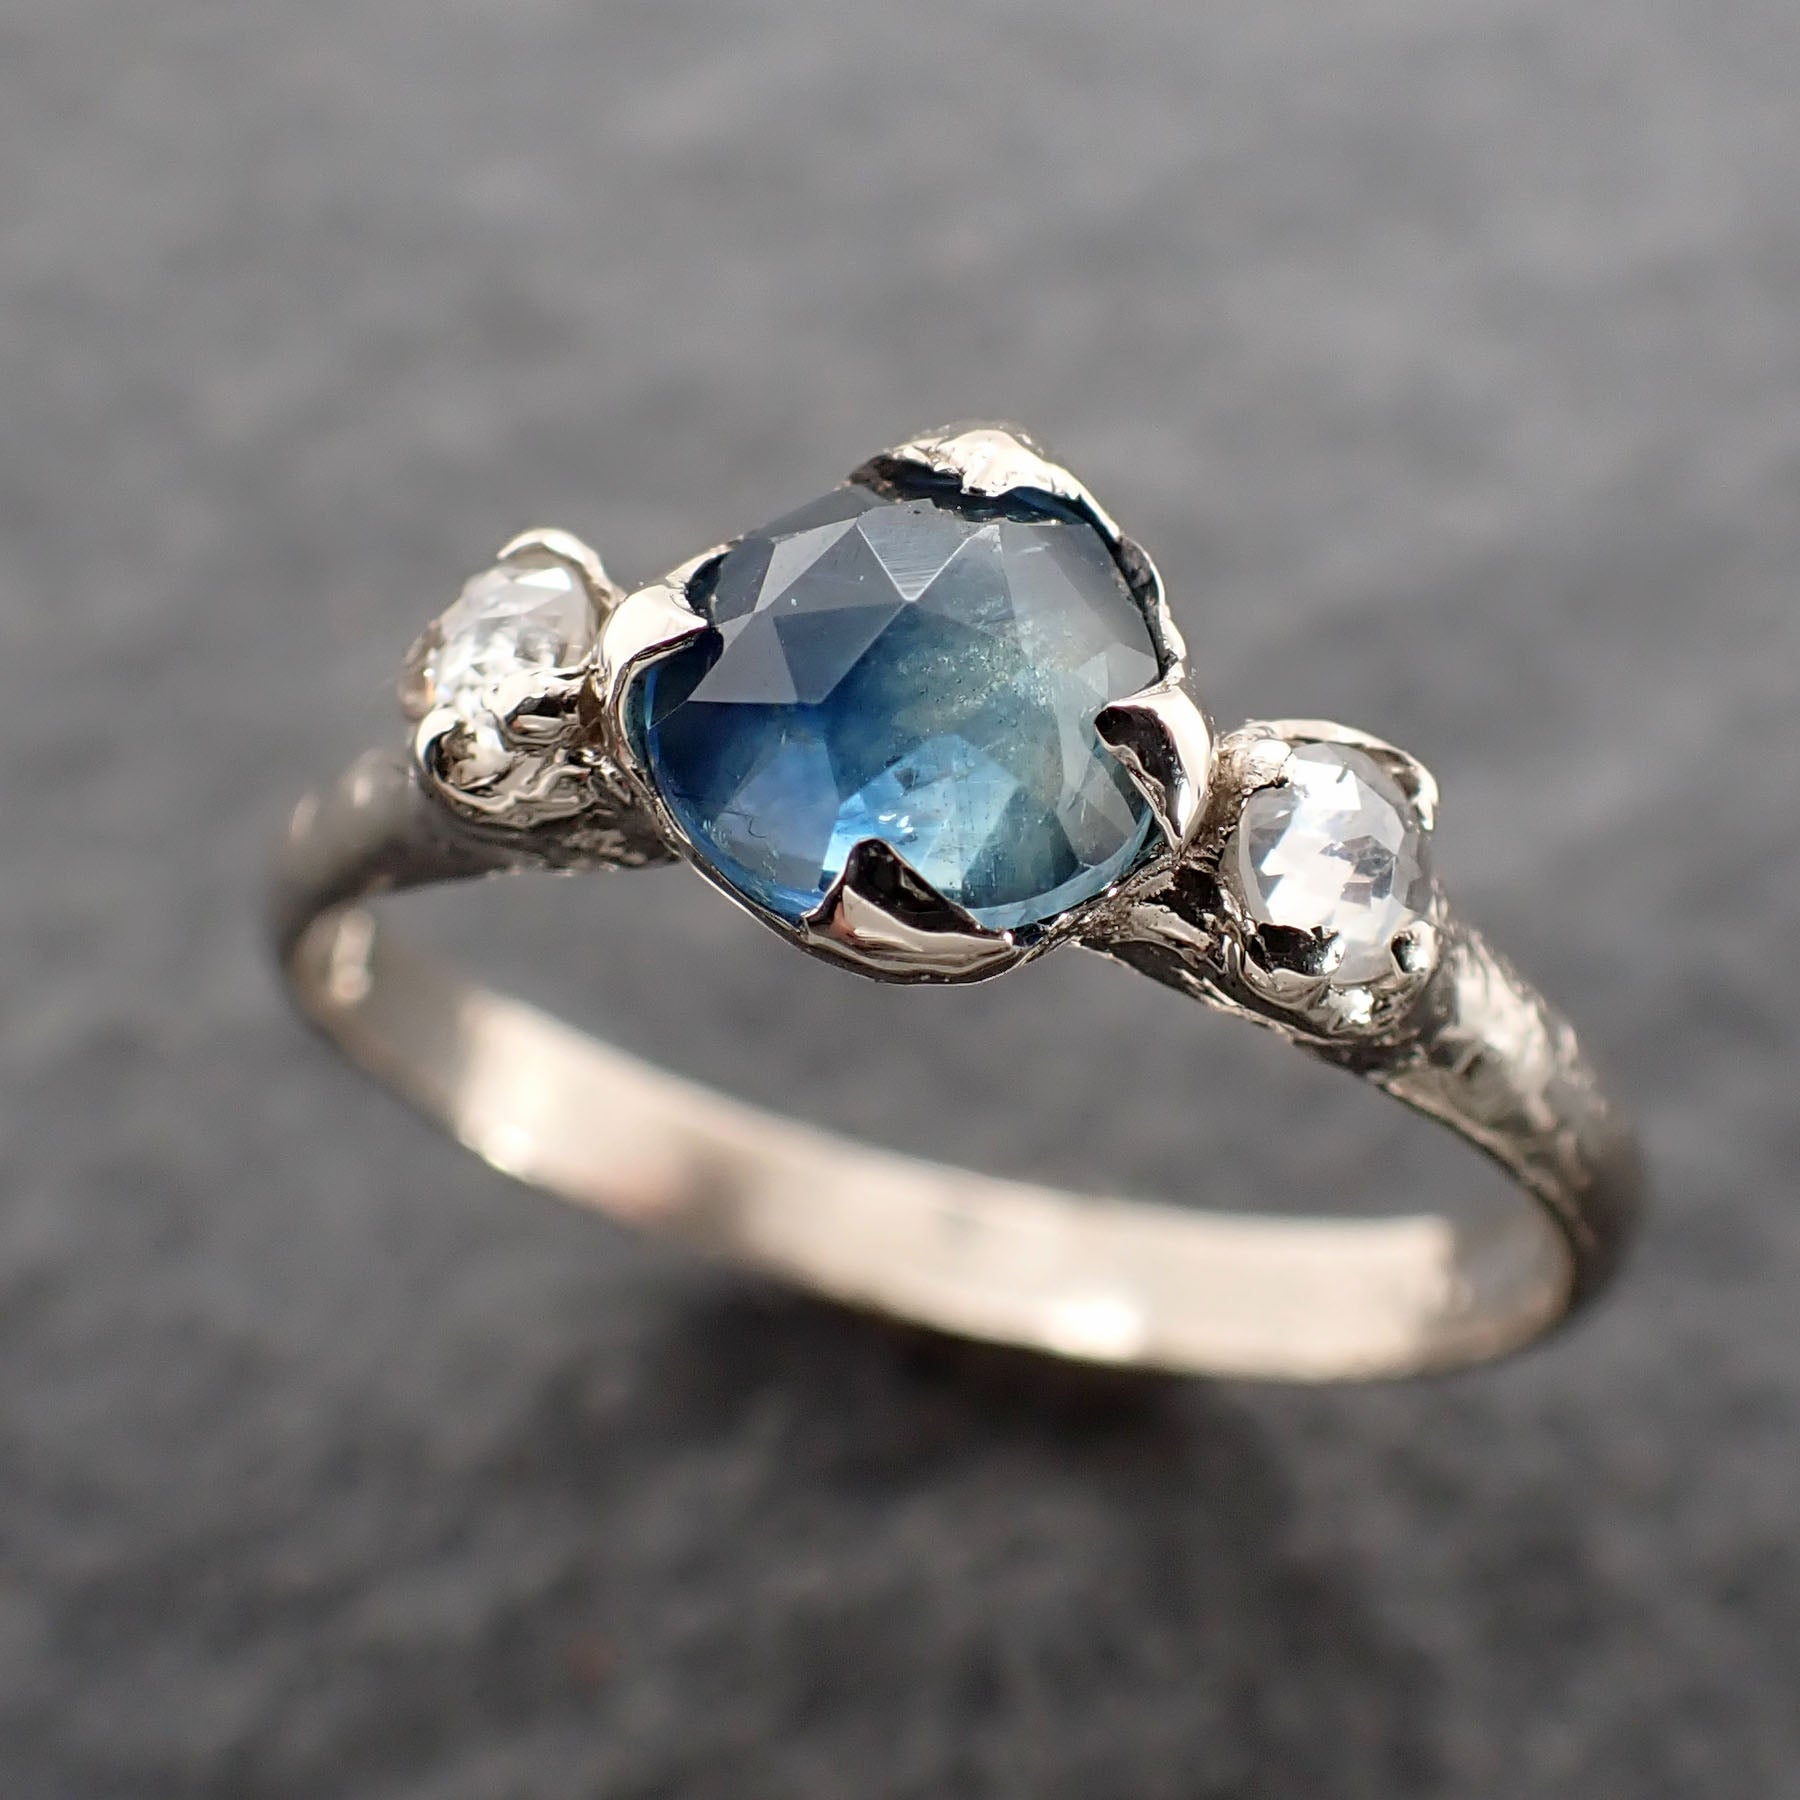 fancy cut montana sapphire diamond 14k white gold engagement ring wedding ring blue gemstone ring multi stone ring 2490 Alternative Engagement